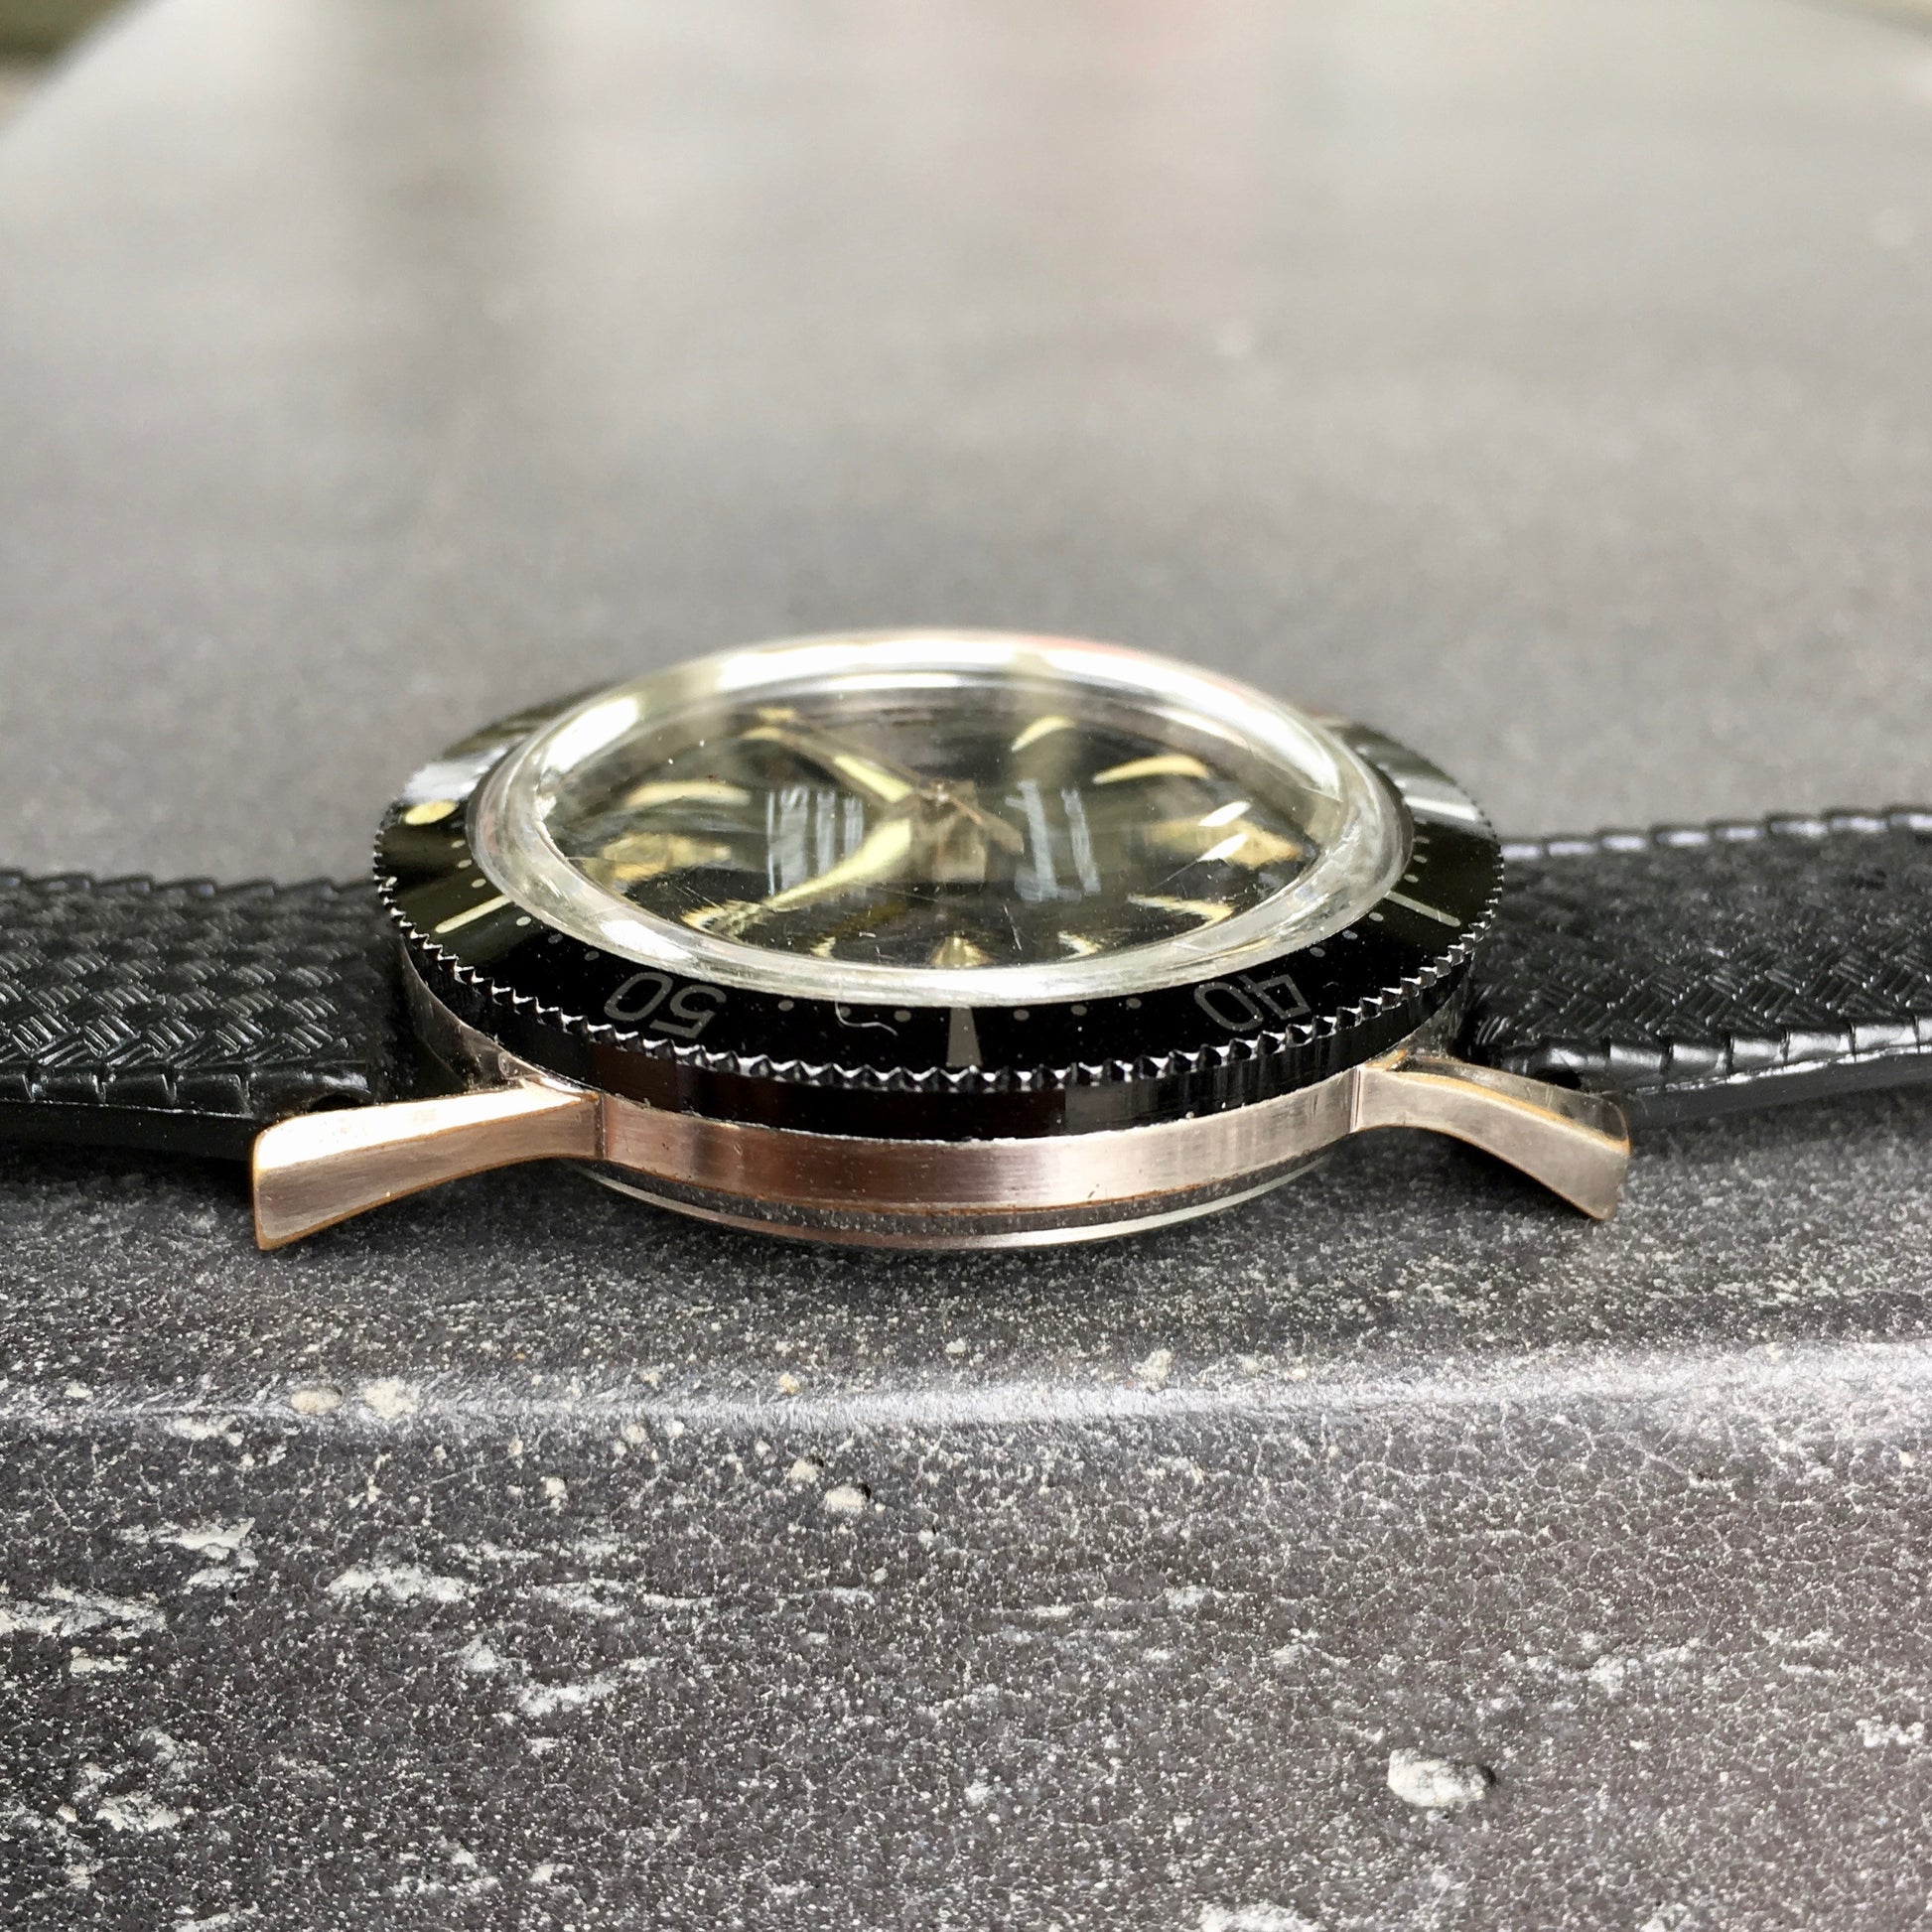 Vintage Monvis Glucydur Divers Incabloc Automatic Date Black Stainless Steel Wristwatch - Hashtag Watch Company